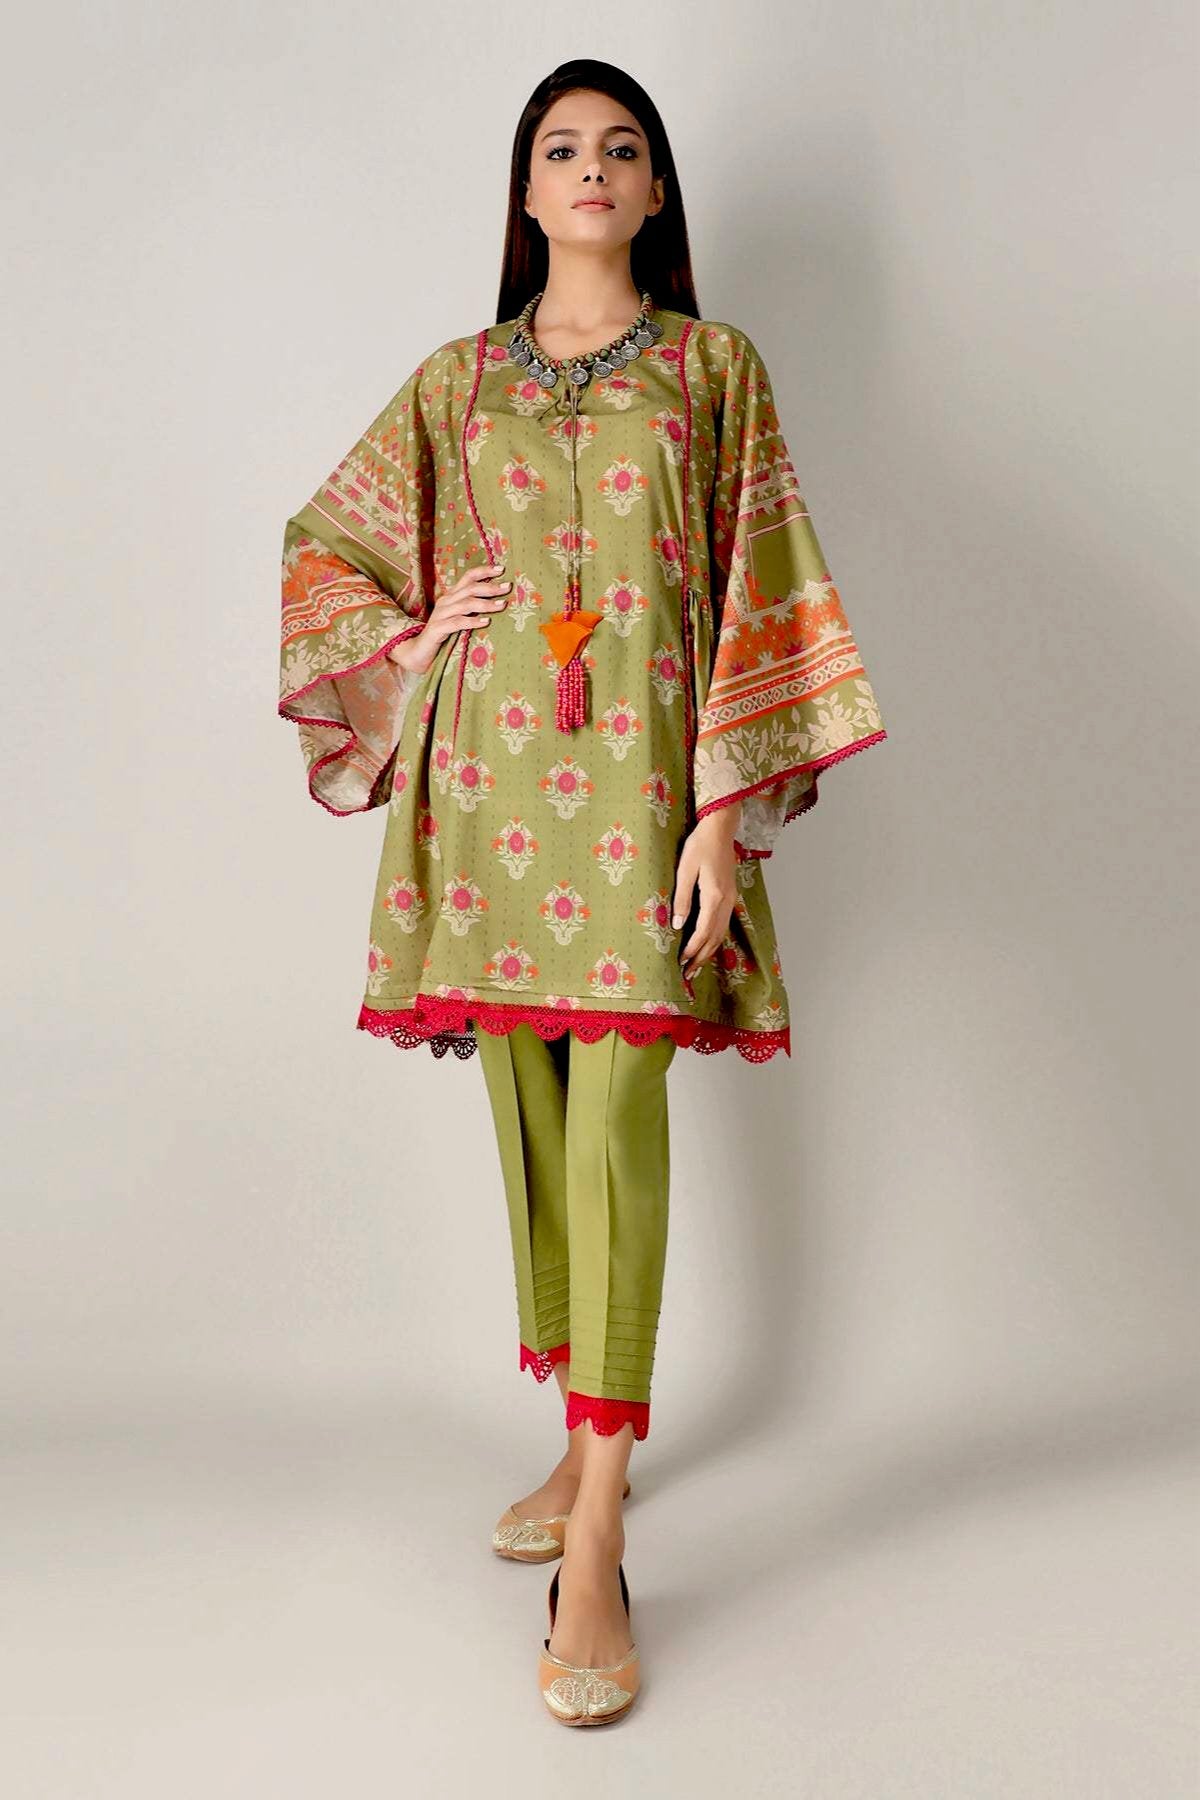 Buy Creative Designer Pakistani Women's Wear Salwar Kameez Plazzo/pant  Suits Wedding Reception Wear Shalwar Kameez Trouser Pant Dress Made by Me  Online in India - Etsy